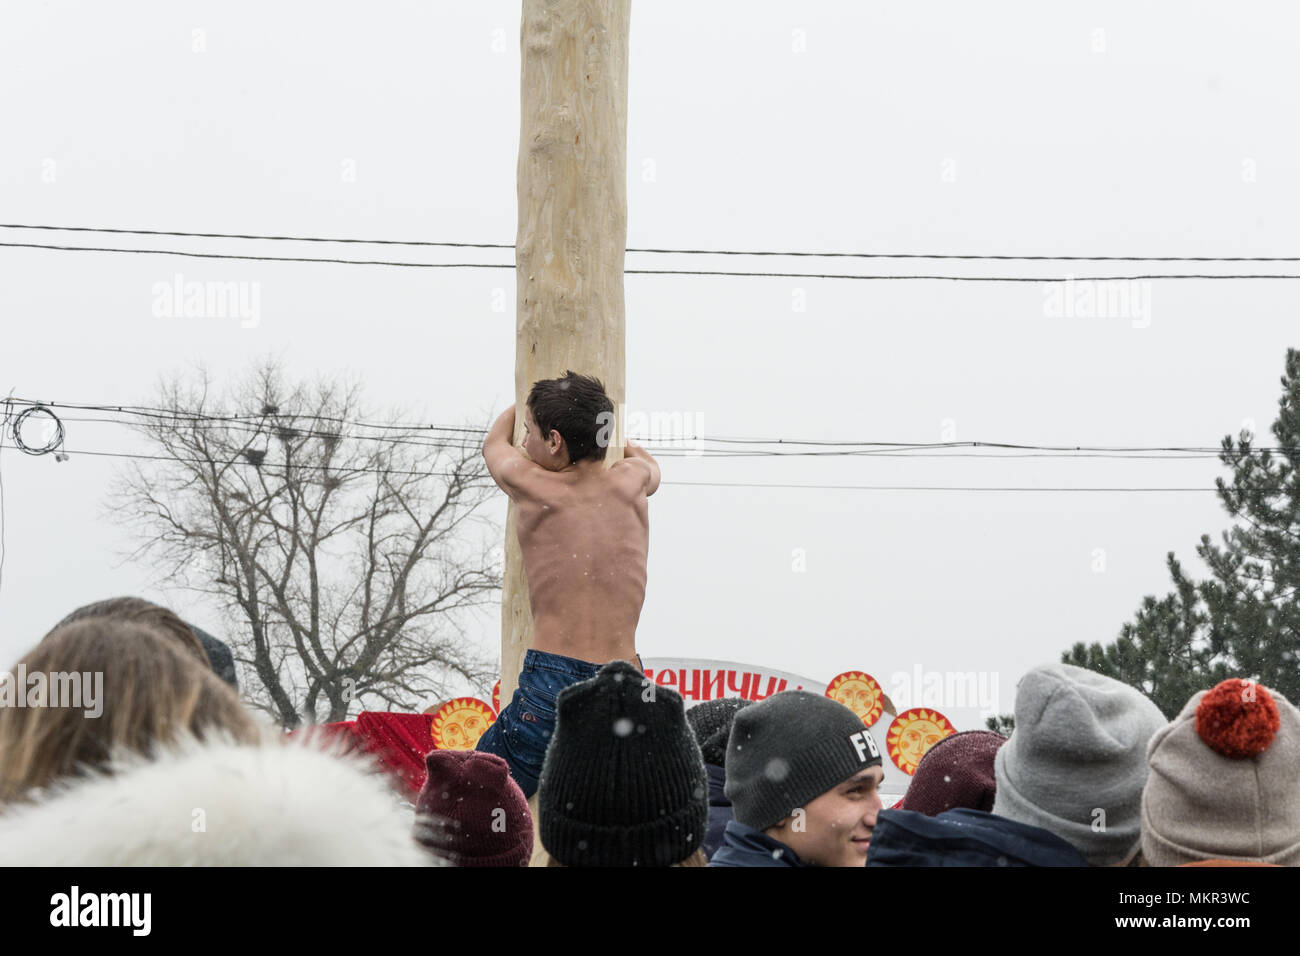 TIRASPOL, MOLDOVA-FEBRUARY 18, 2018: Boy climbing on a wooden pole for the prize. Slavonic folk pagan holiday Maslenitsa (Shrovetide) - a symbolic mee Stock Photo